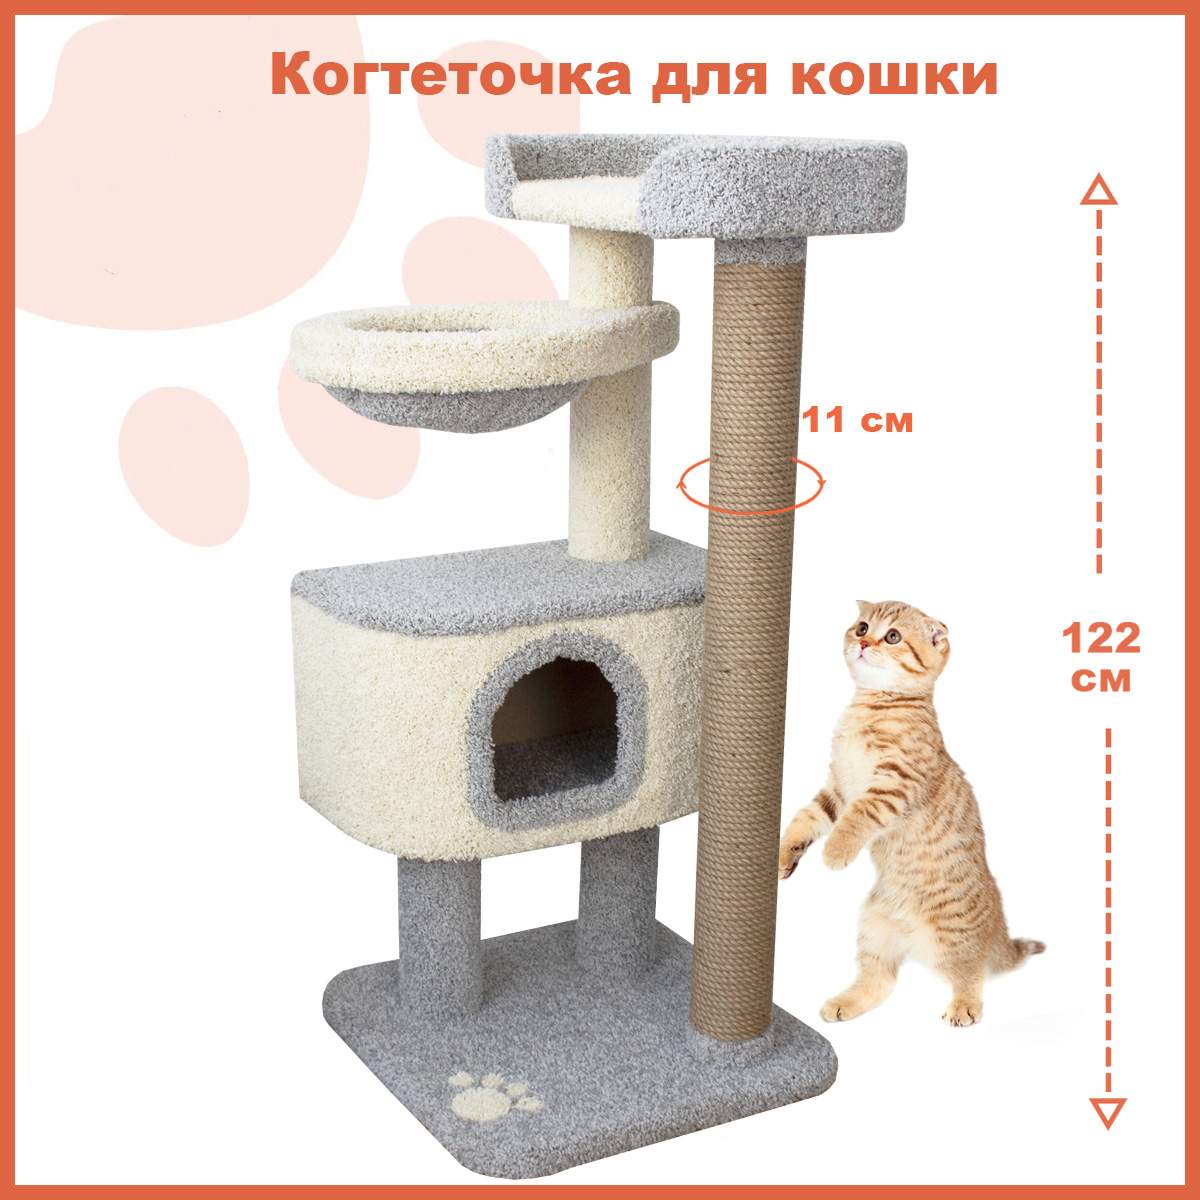 Комплексы для кошек ZooДом - купить комплексы для кошек ZooДом, цены на Мегамаркет